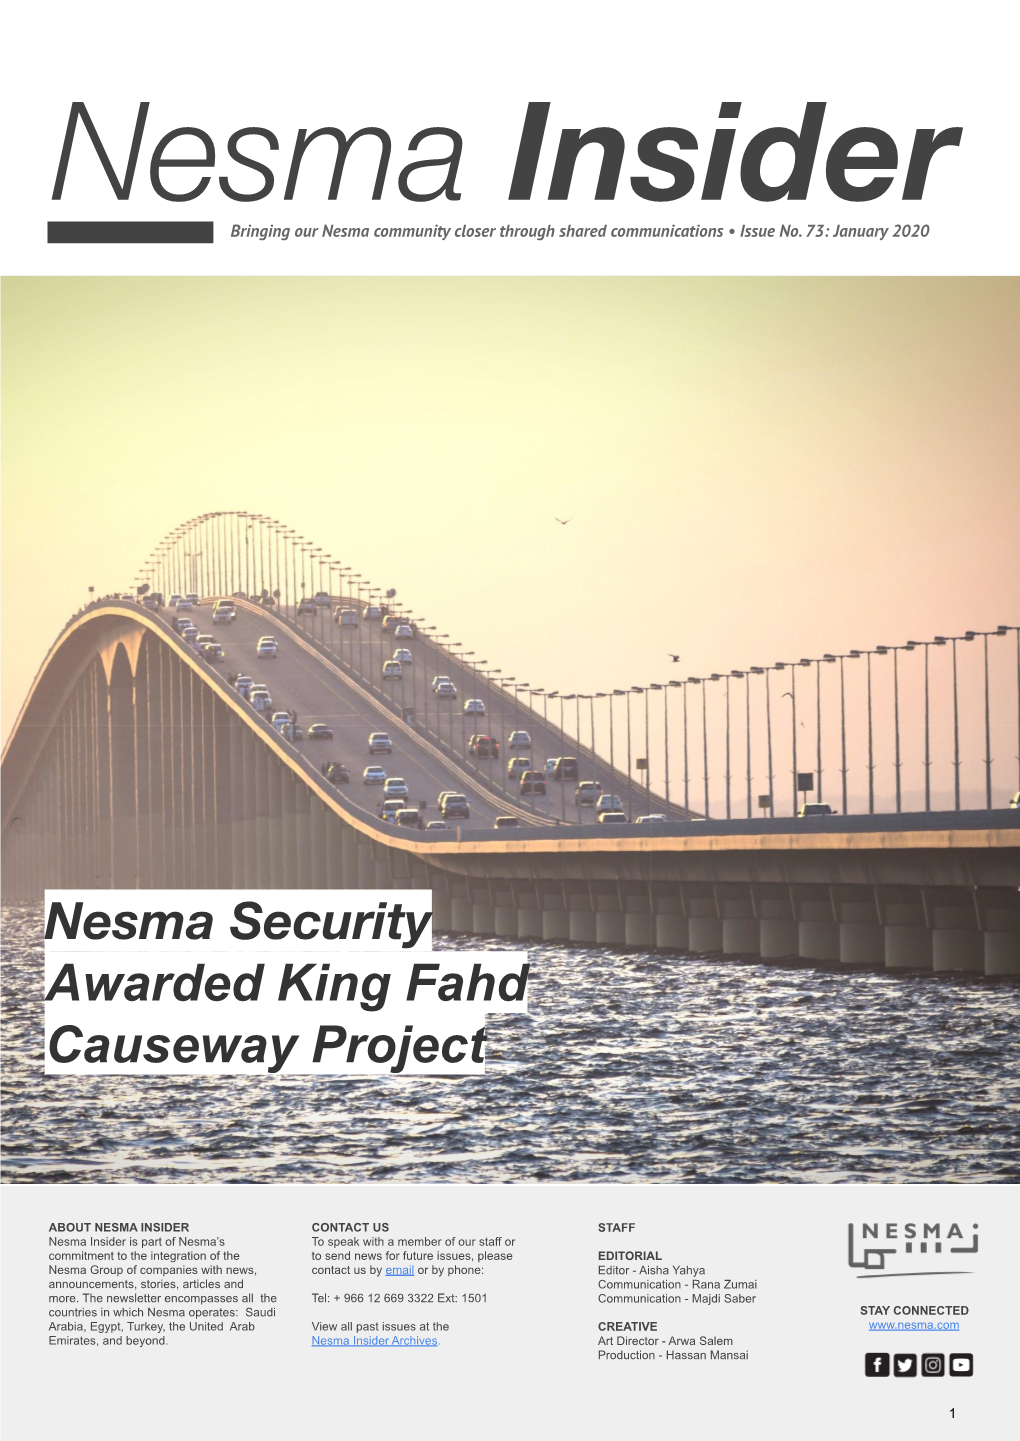 Awarded King Fahd Causeway Project